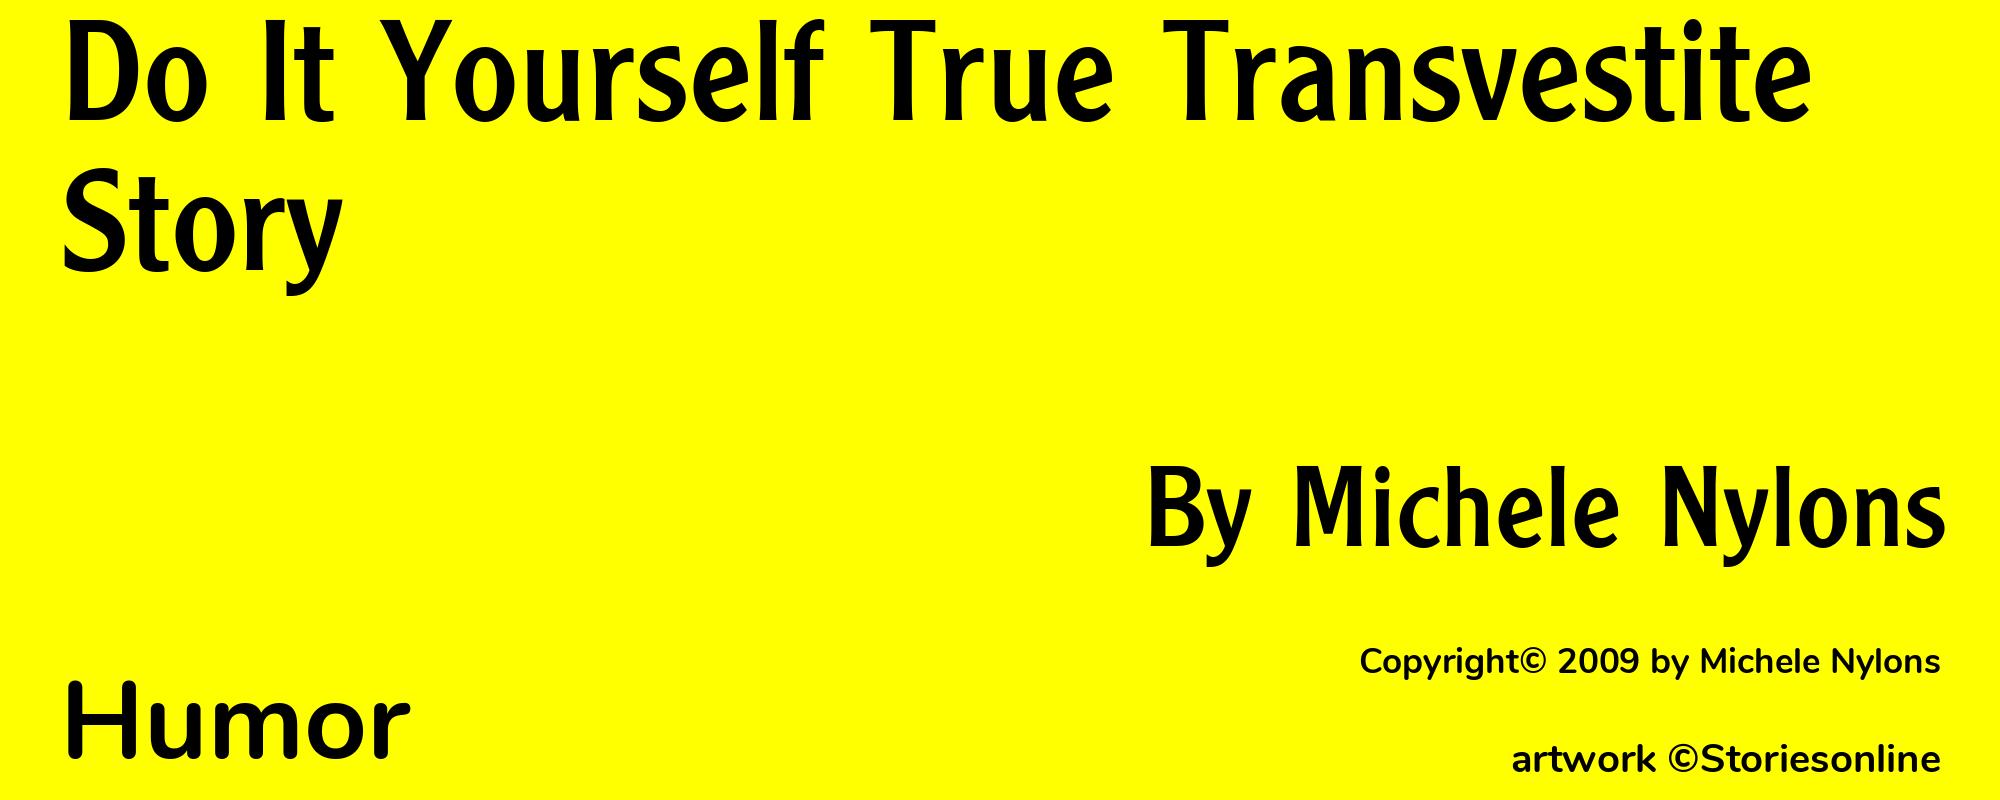 Do It Yourself True Transvestite Story - Cover